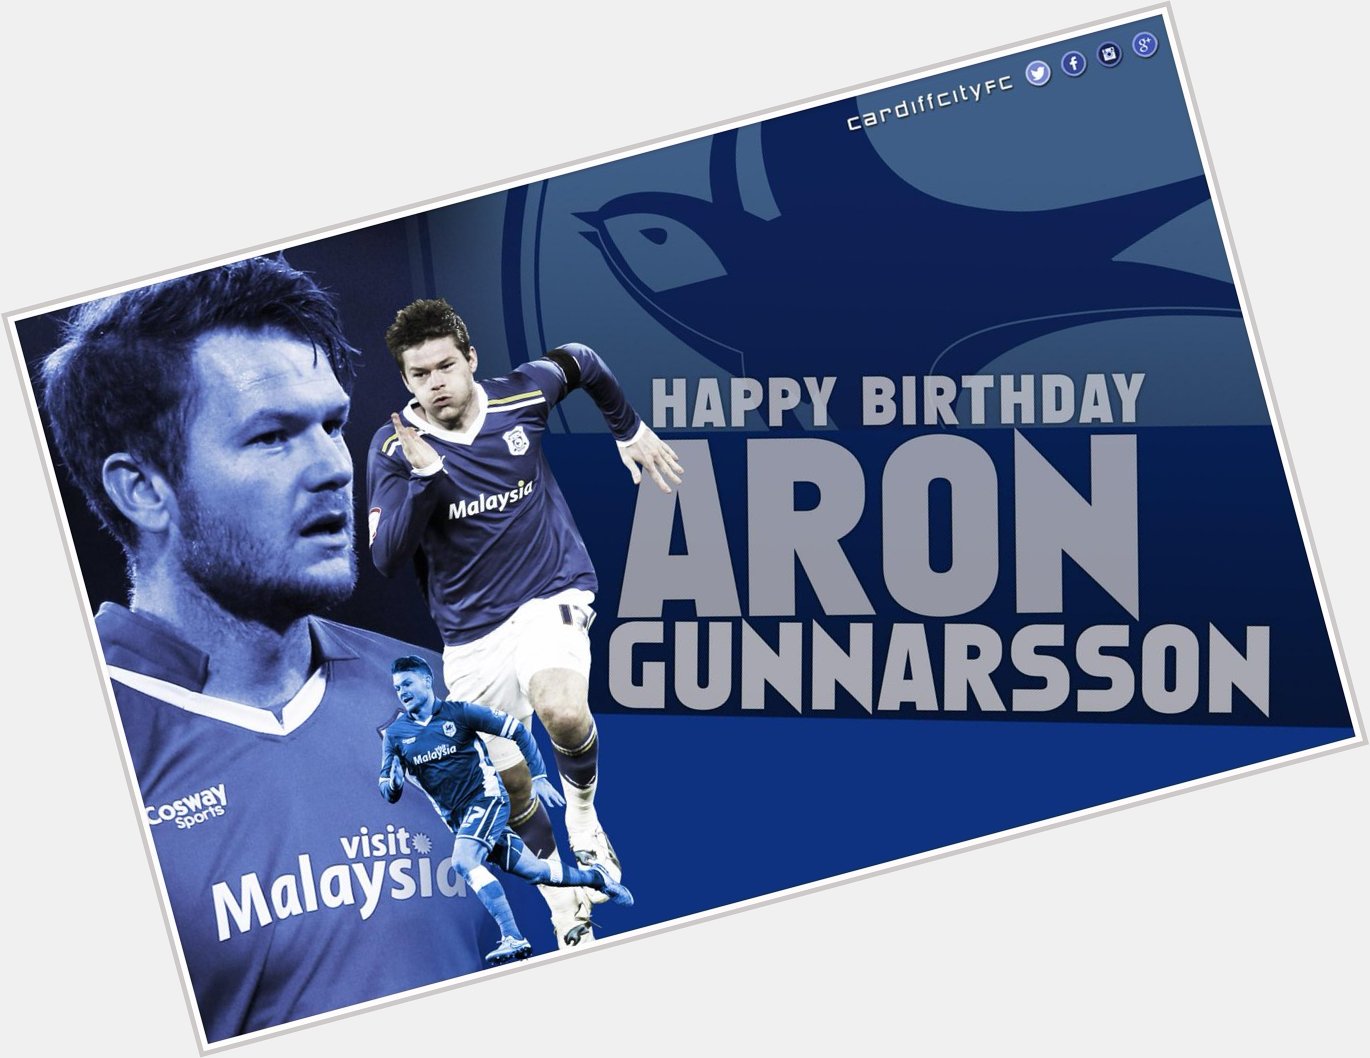 Happy birthday to Aron Gunnarsson. Enjoy the rest of the day Gunnar! 